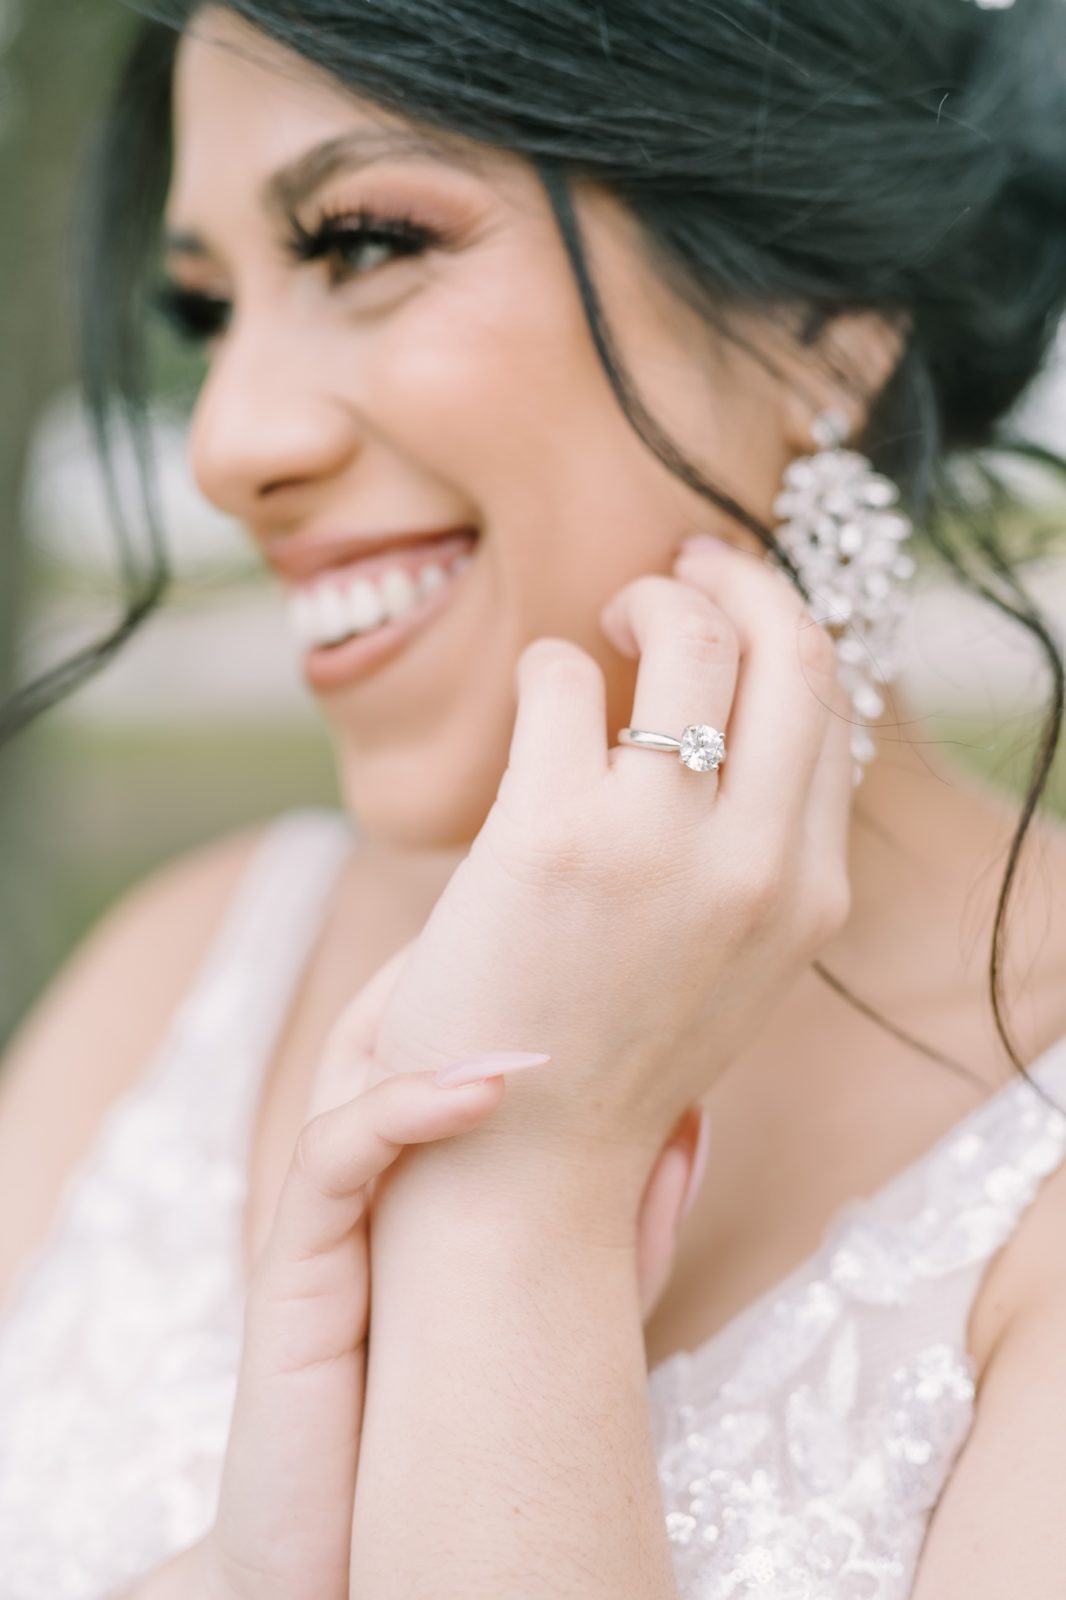 Christina Elliott Photography captures a close-up portrait of a bride wearing a vintage wedding ring. wedding jewelry round #ChristinaElliottPhotography #ChristinaElliottBridals #Houstonweddings #Farmhousewedding #TheSpringsVenue #BridalsHouston